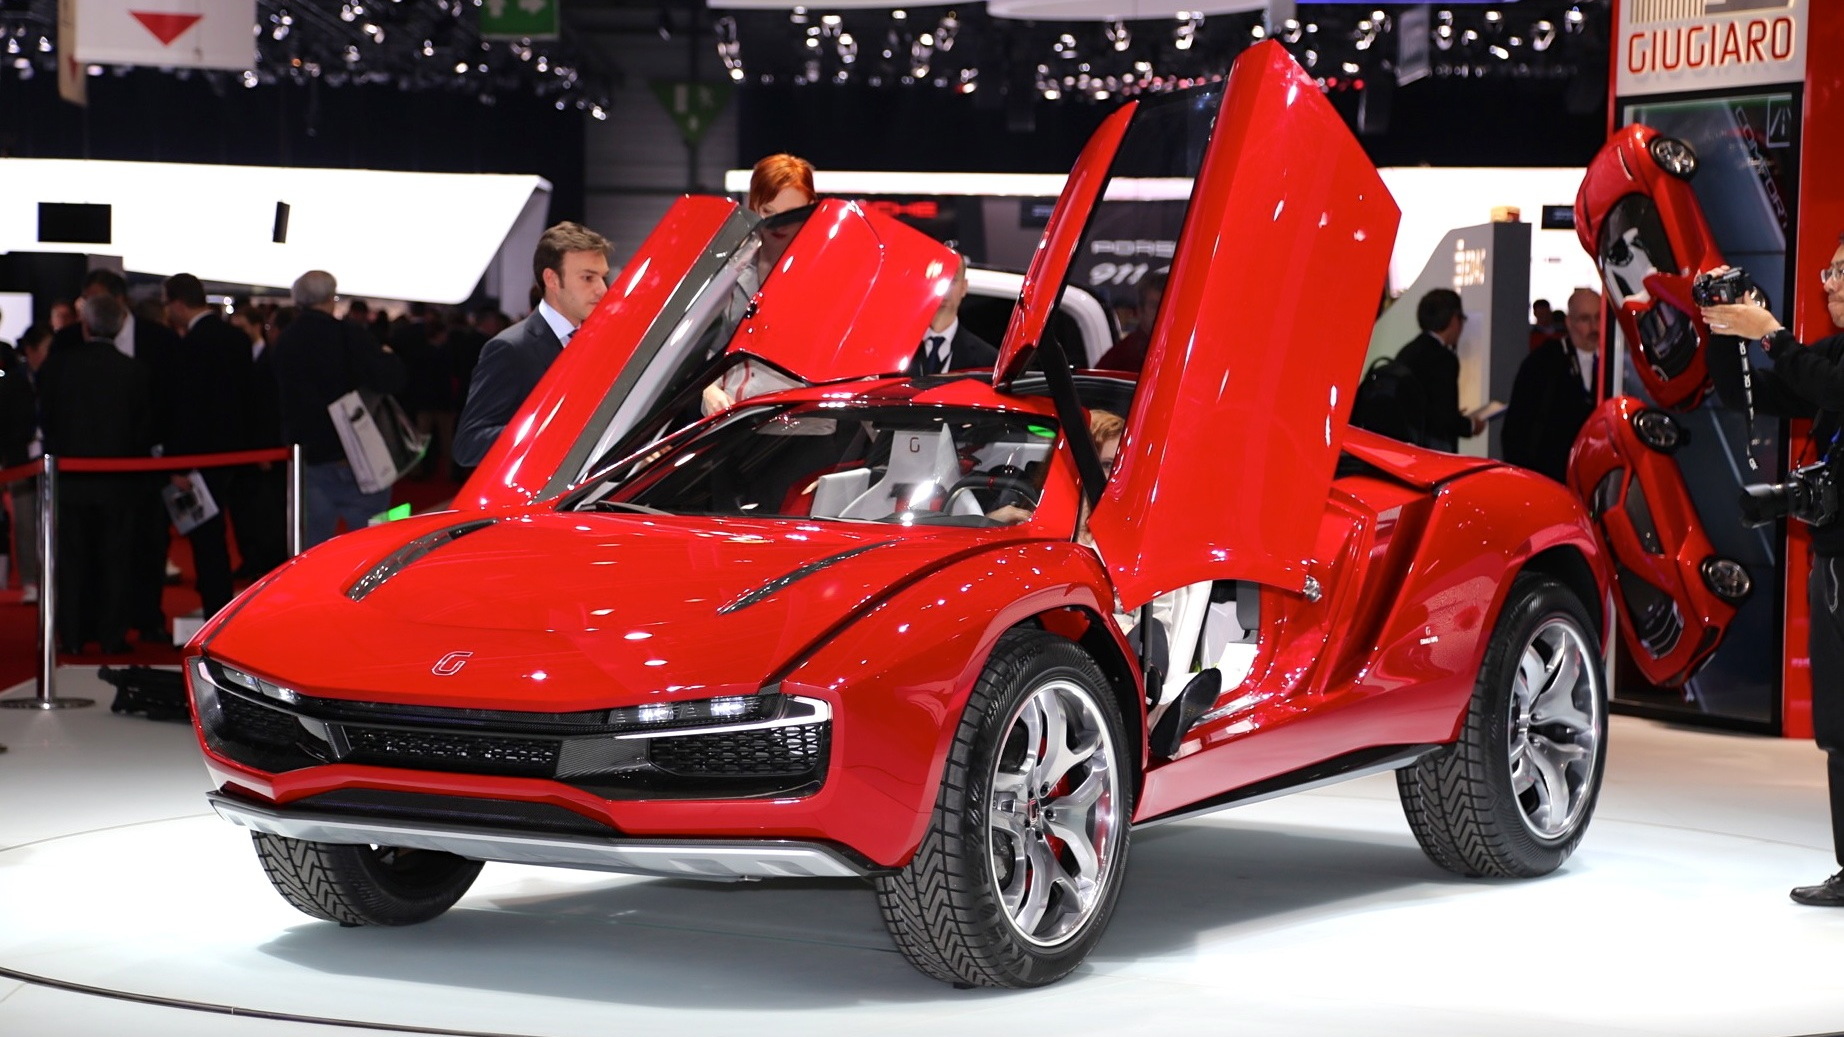 Italdesign Giugiaro Parcour Concept, 2013 Geneva Motor Show